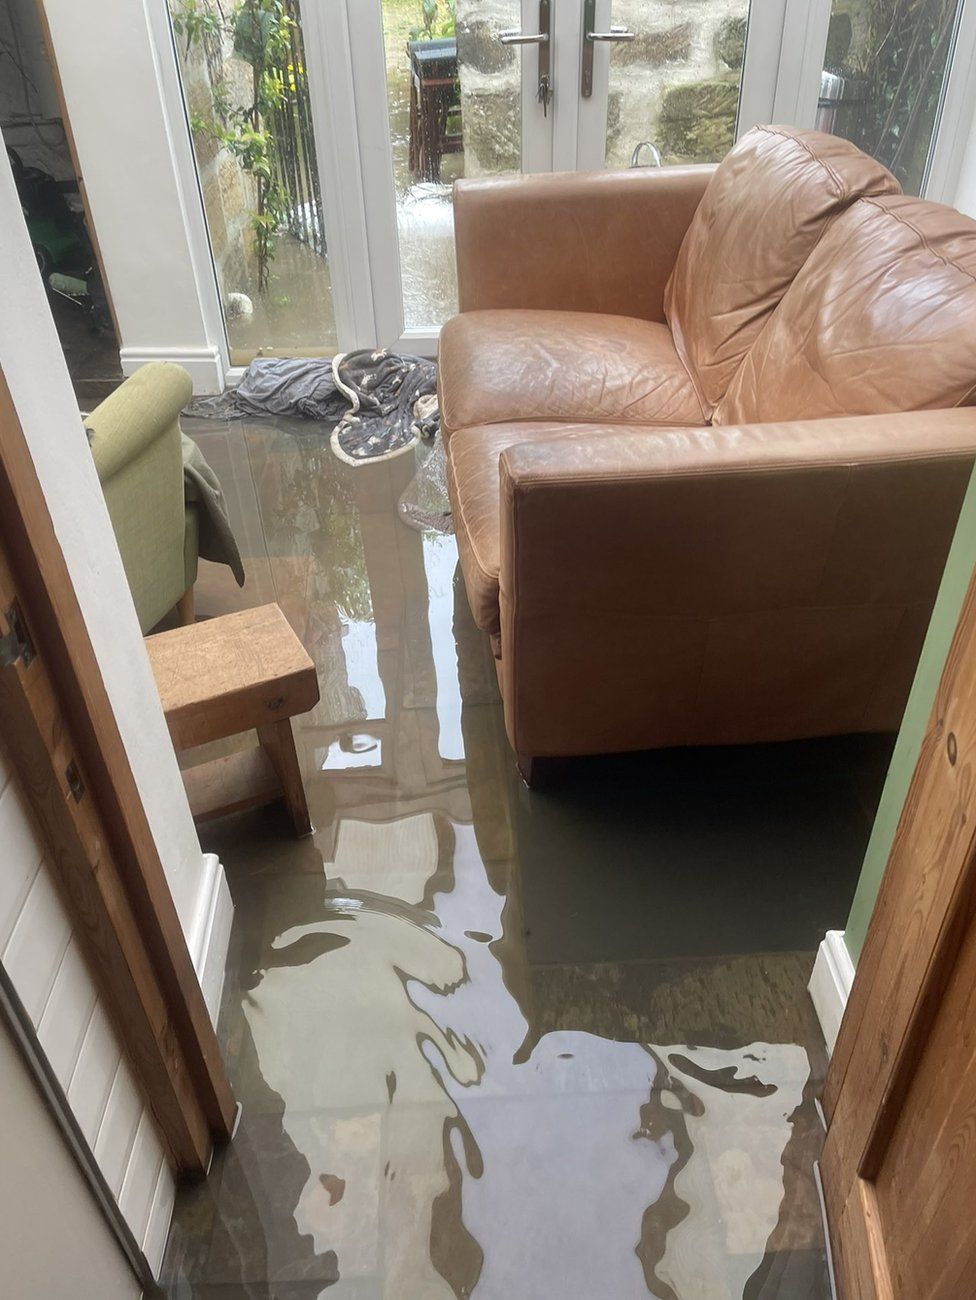 Flooding in Paul Jones-King's home